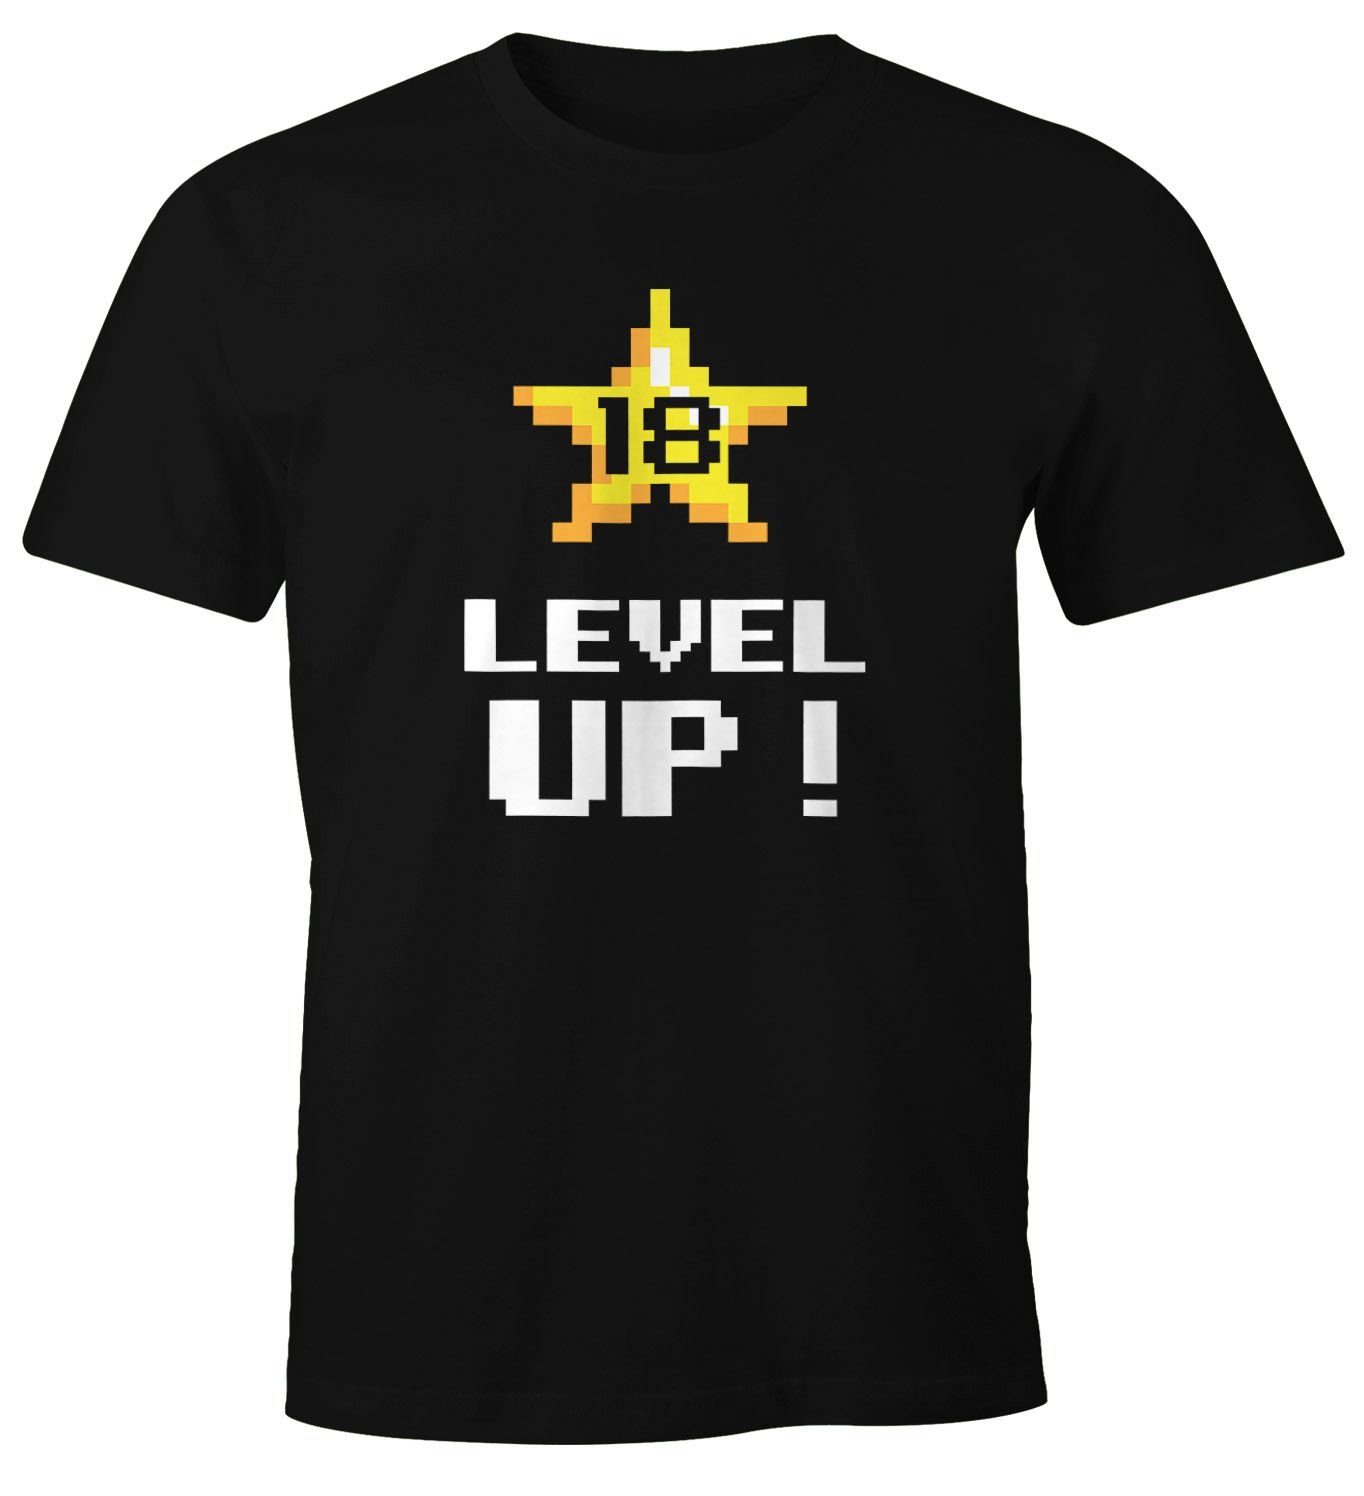 Pixelgrafik Herren Geschenk Geburtstag MoonWorks Gamer Fun-Shirt Pixel-Stern Up 18 Arcade Moonworks® Print schwarz Print-Shirt mit Level T-Shirt Retro